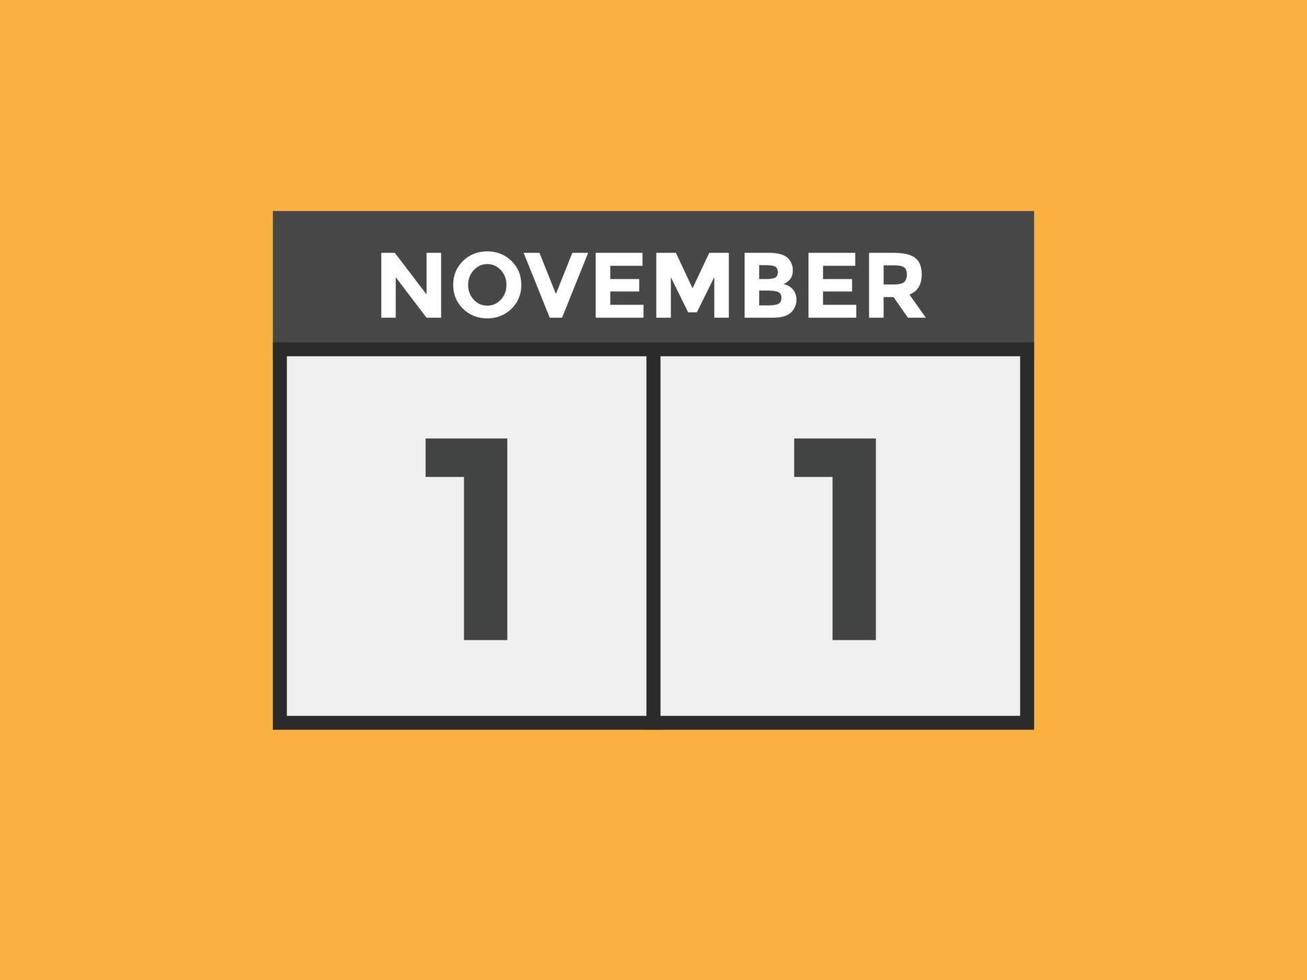 november 11 kalender herinnering. 11e november dagelijks kalender icoon sjabloon. kalender 11e november icoon ontwerp sjabloon. vector illustratie